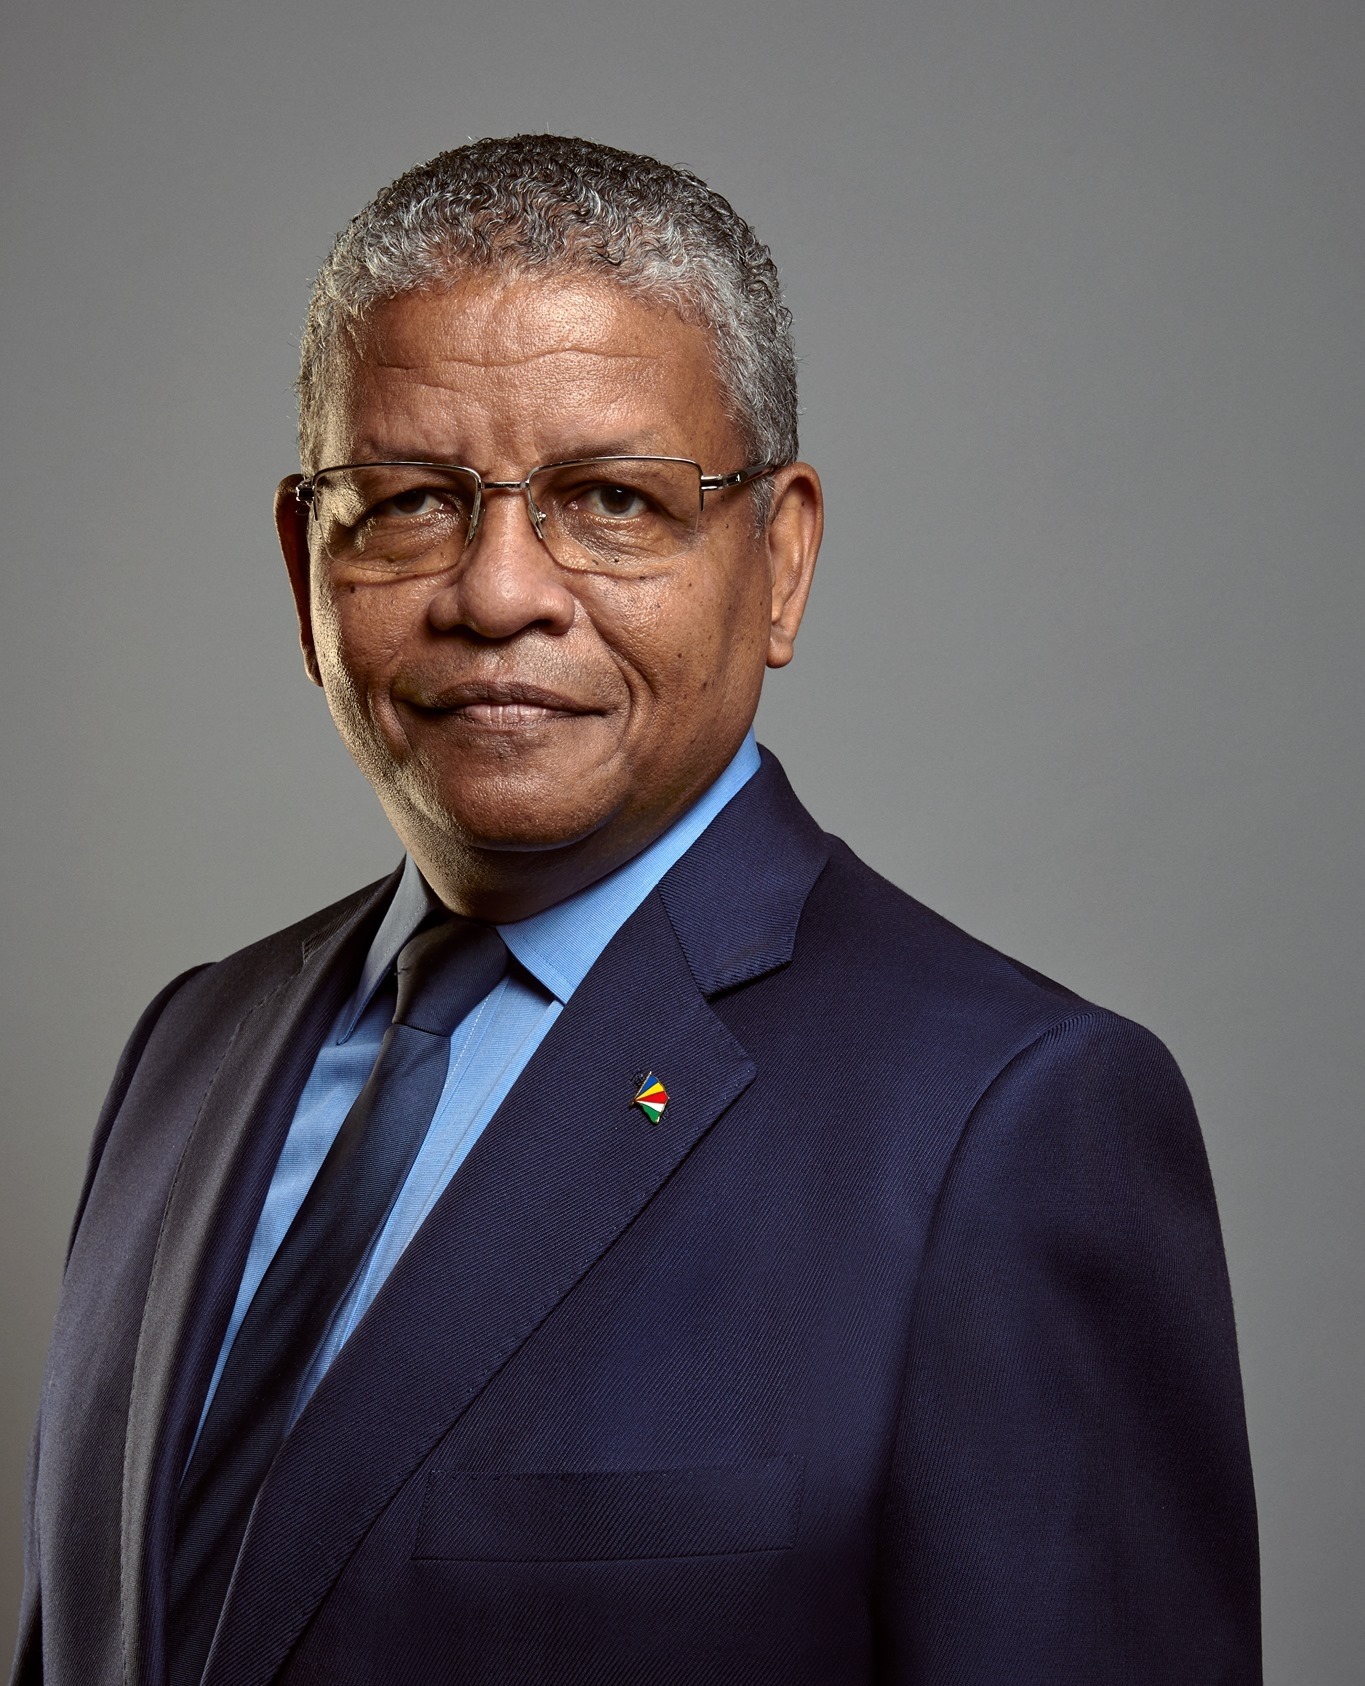 Wavel Ramkalawan, the new and 5th President of the Seychelles